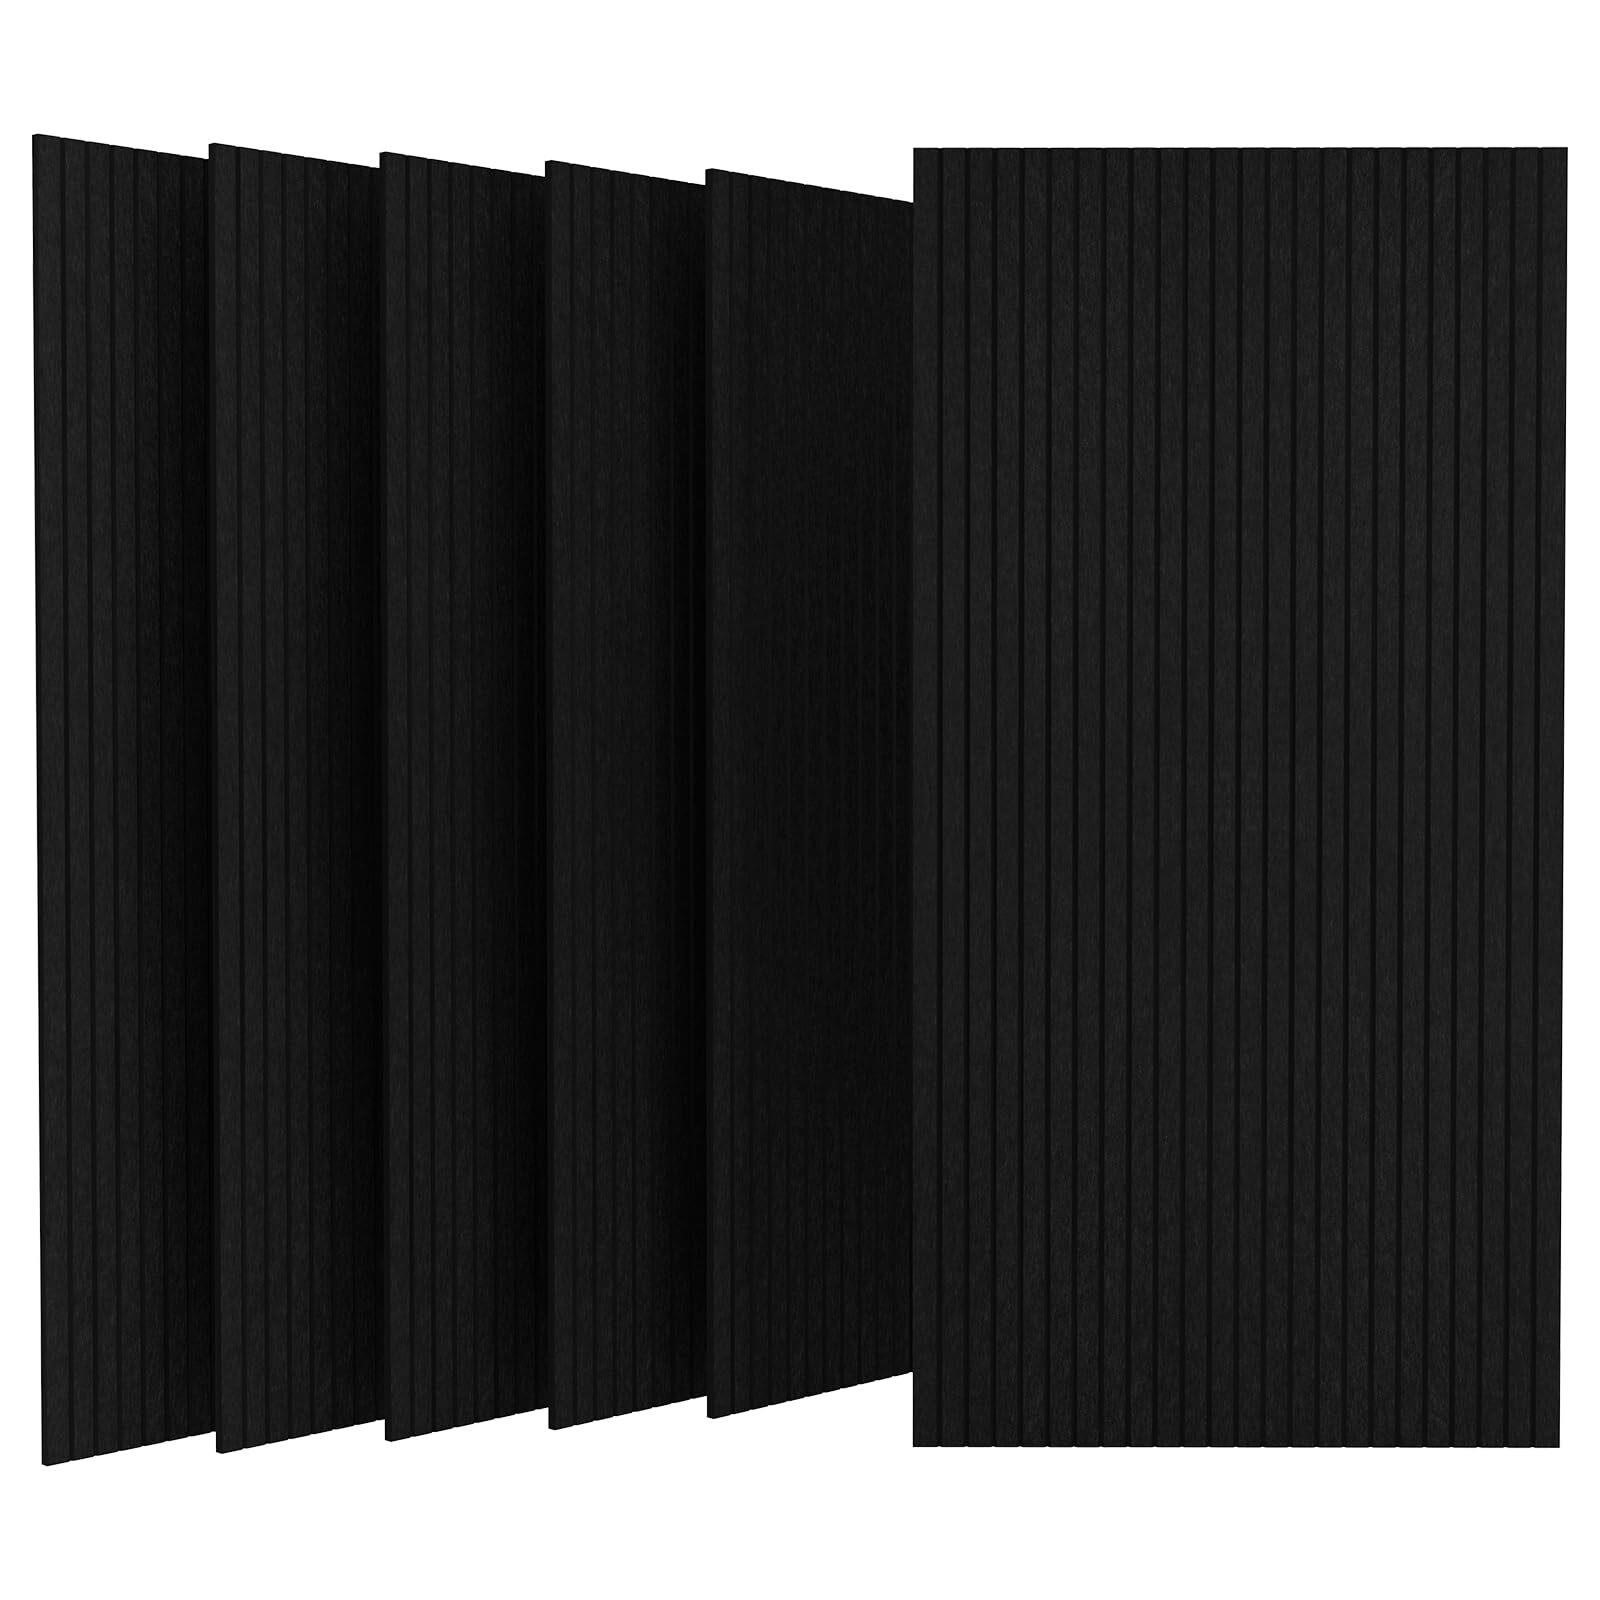 UMIACOUSTICS 6 Packs Acoustic Panel,48 x 24 x 0.4